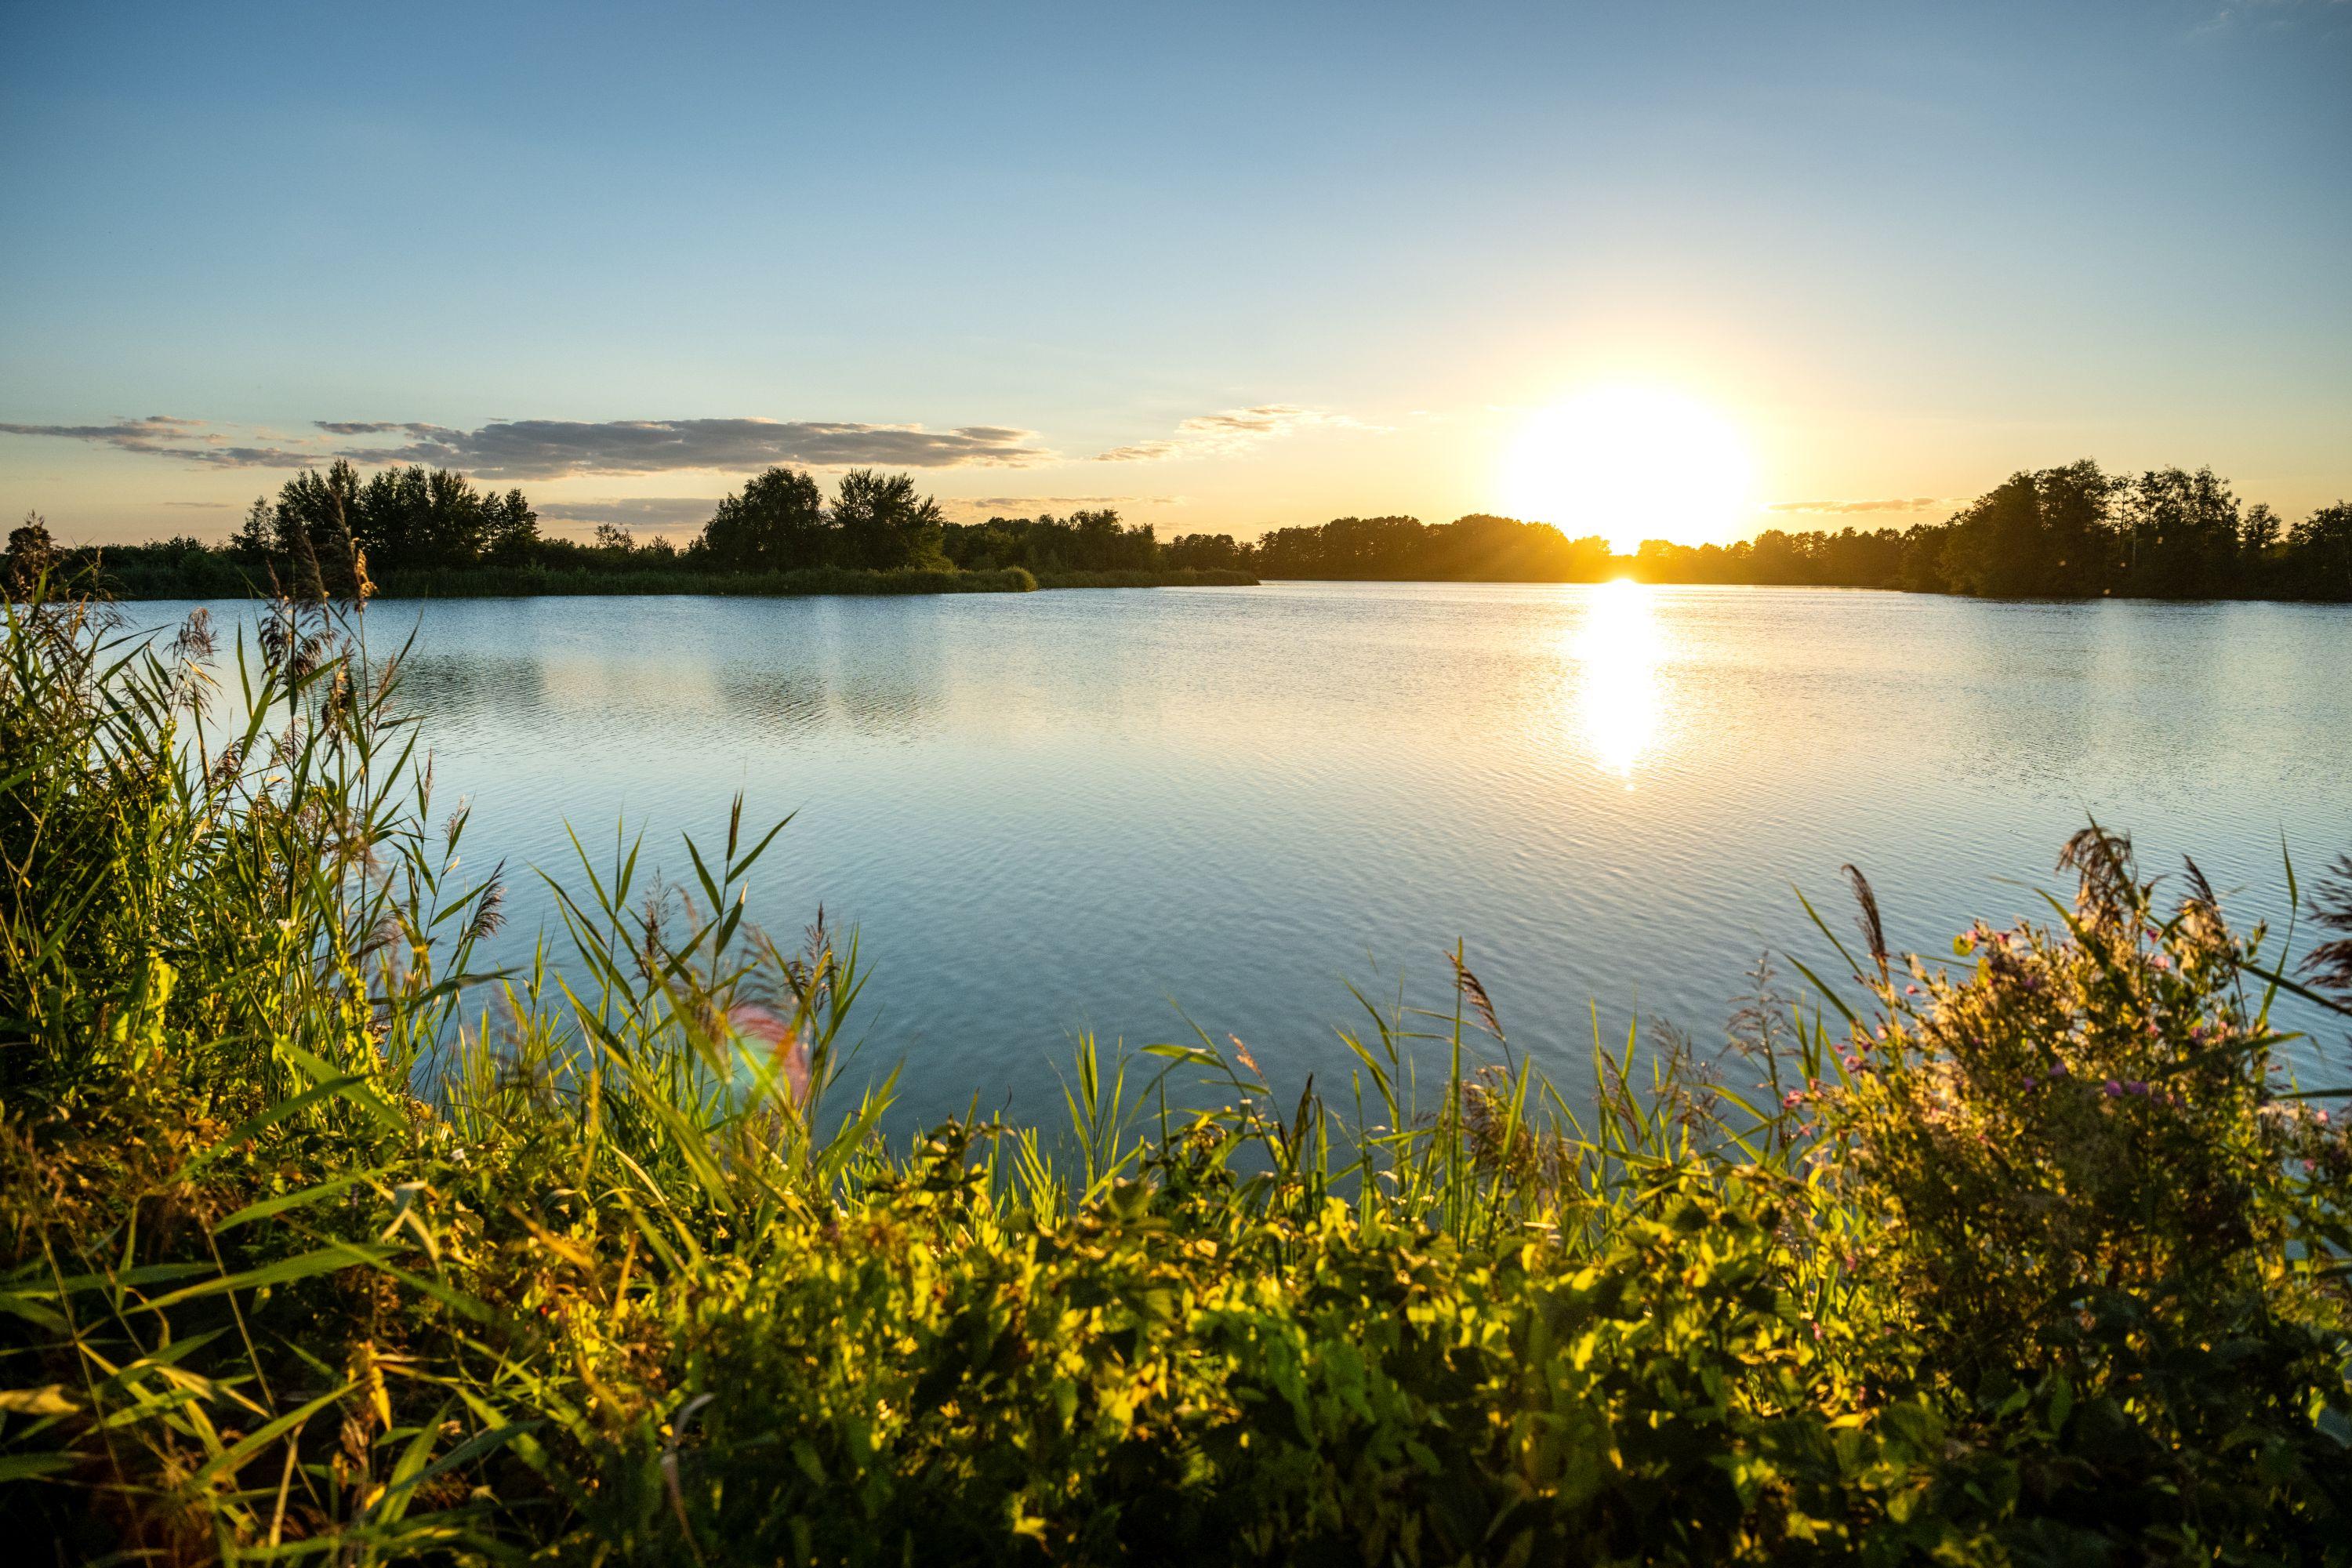 Surprising lake landscape in the heath: Meissendorf Ponds